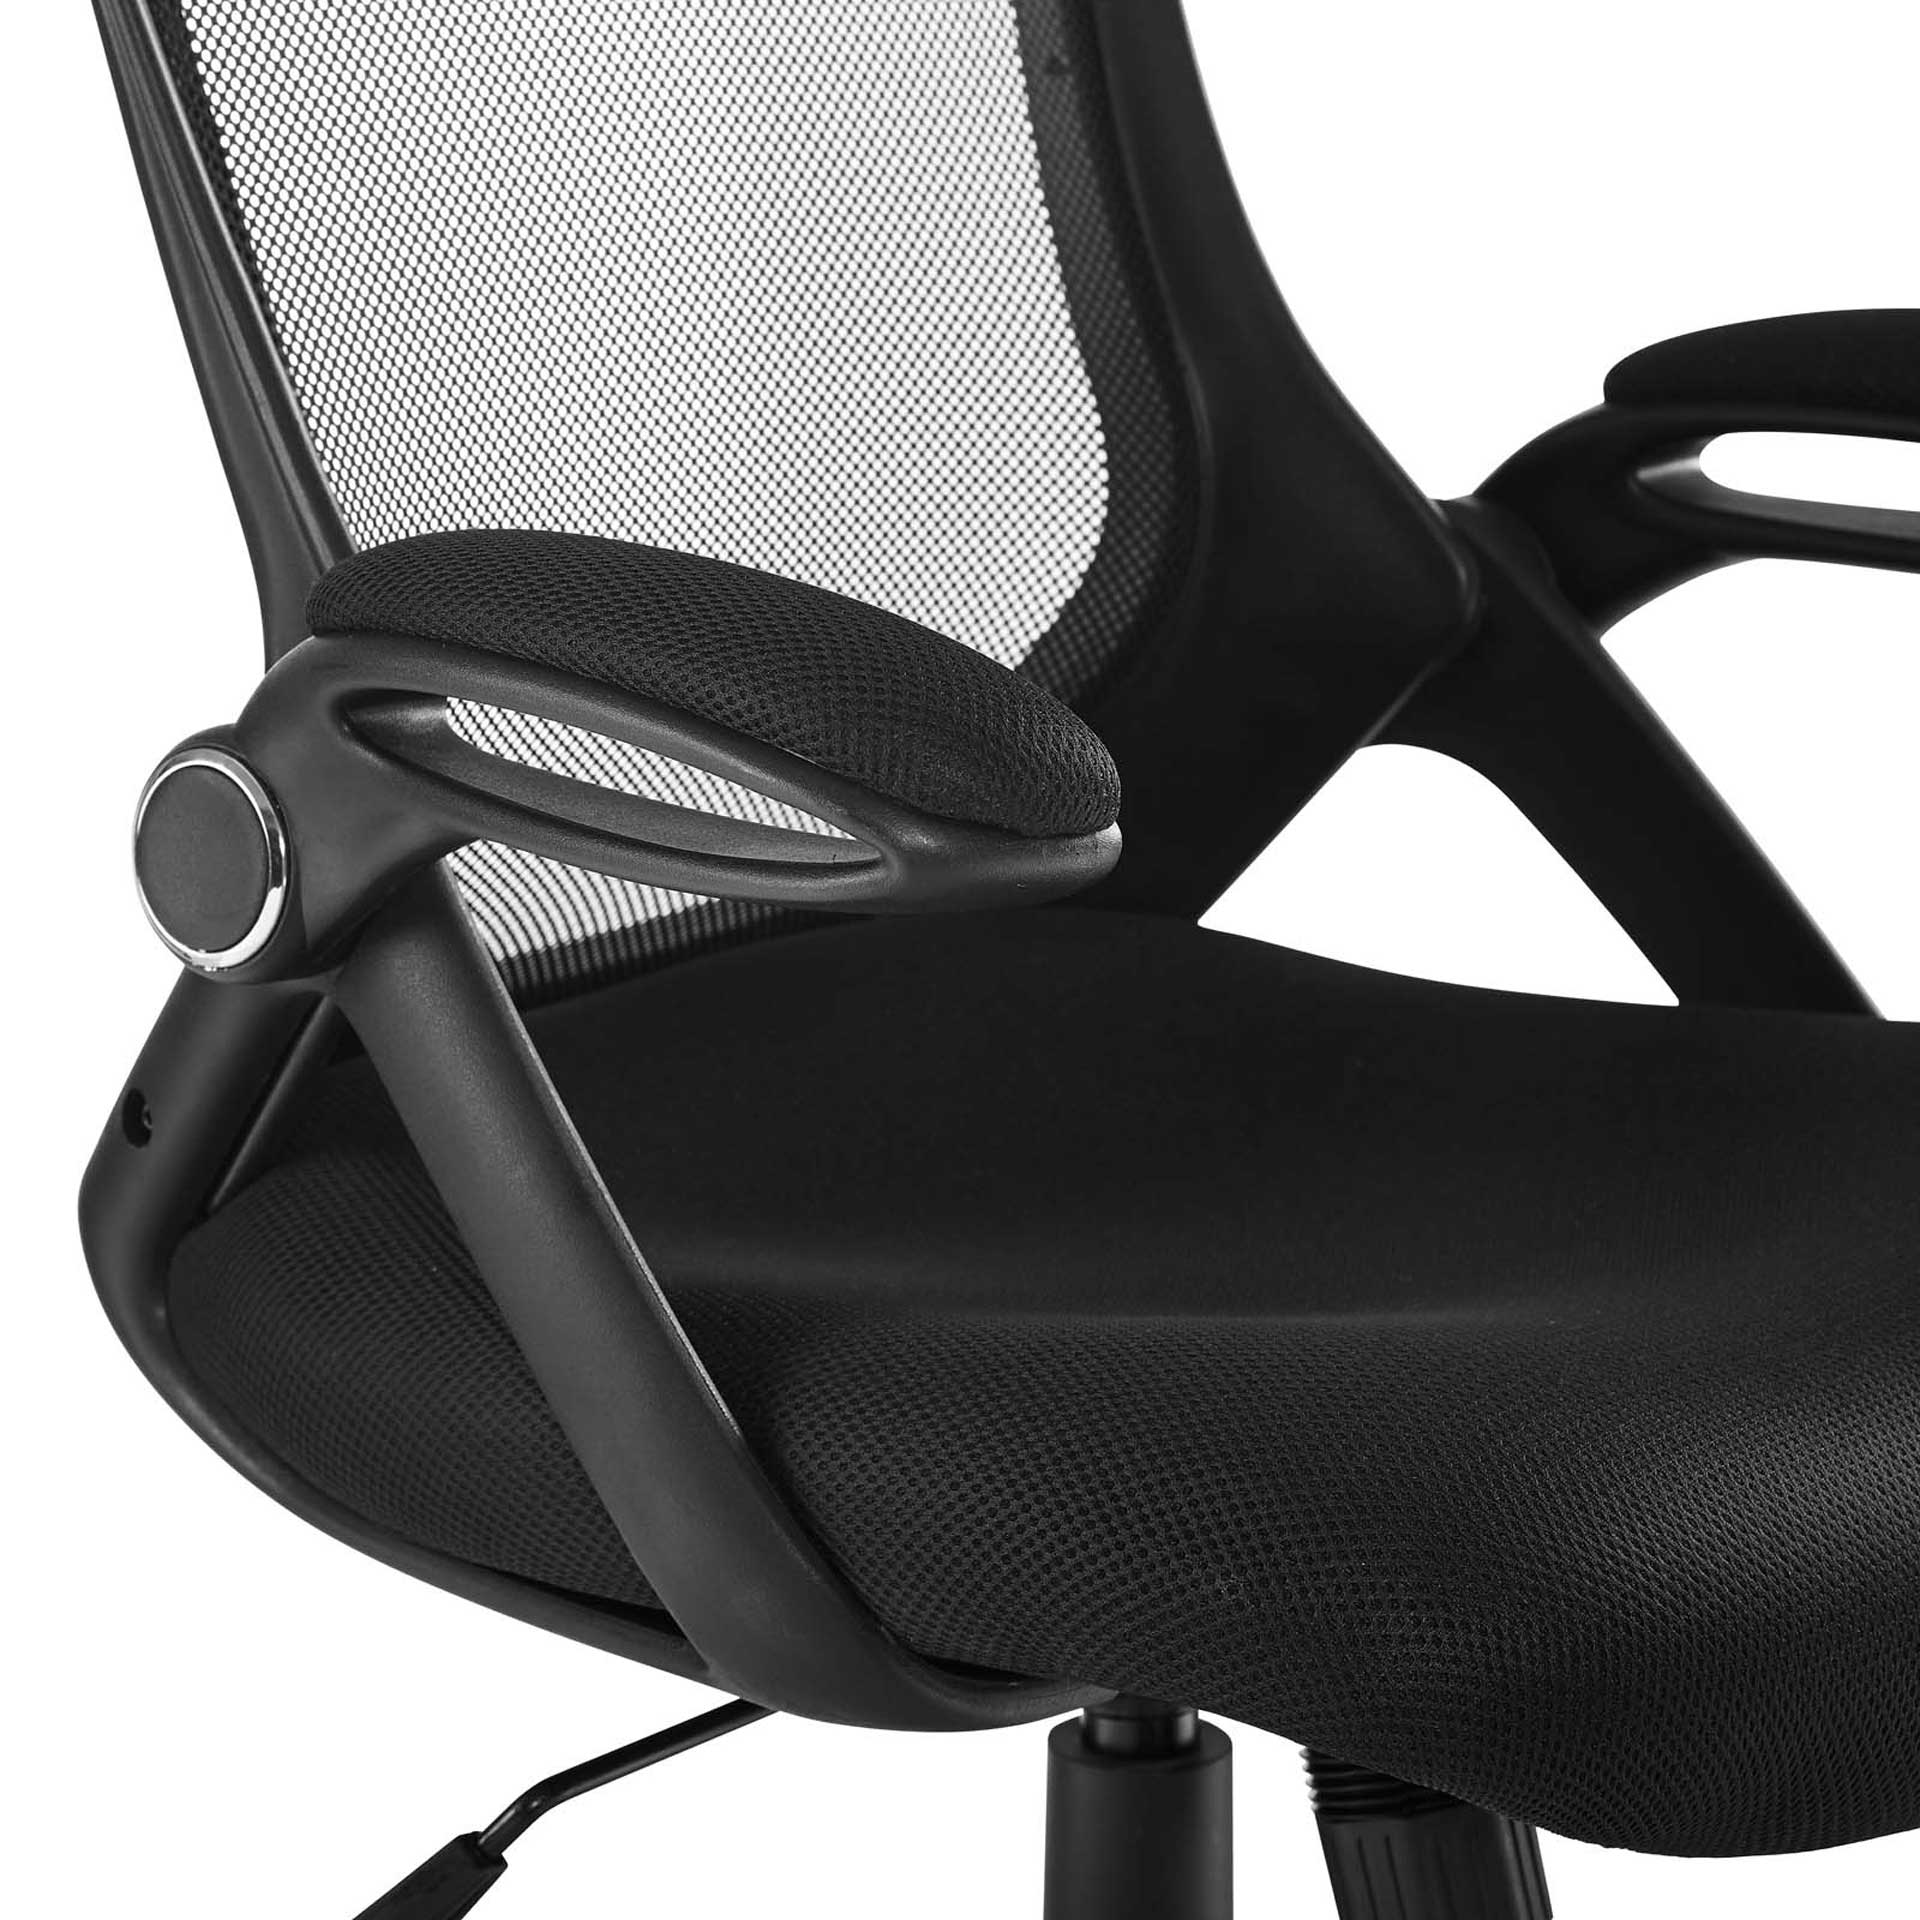 Abram Mesh Office Chair Black